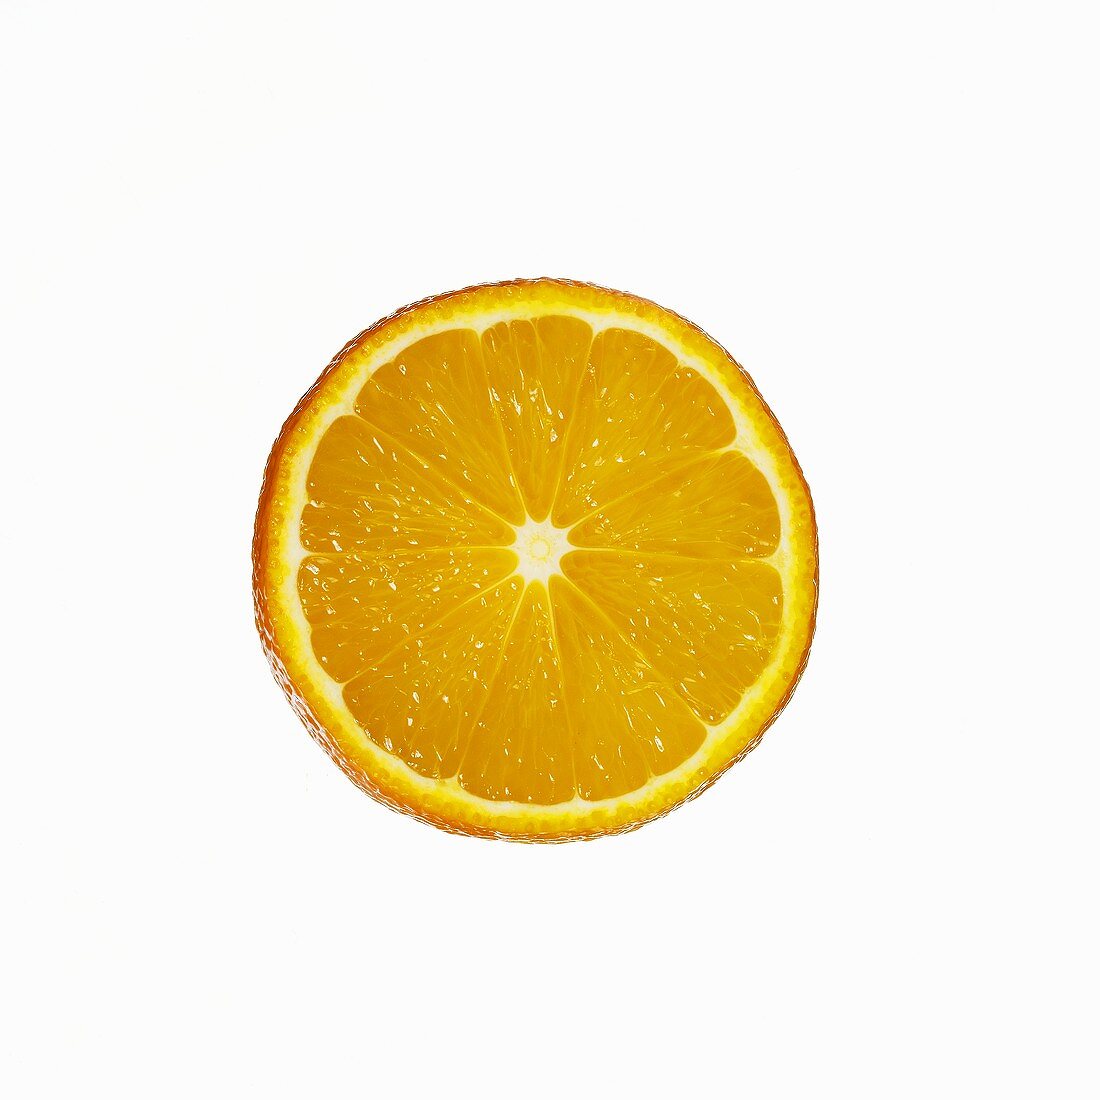 Half a mandarin orange